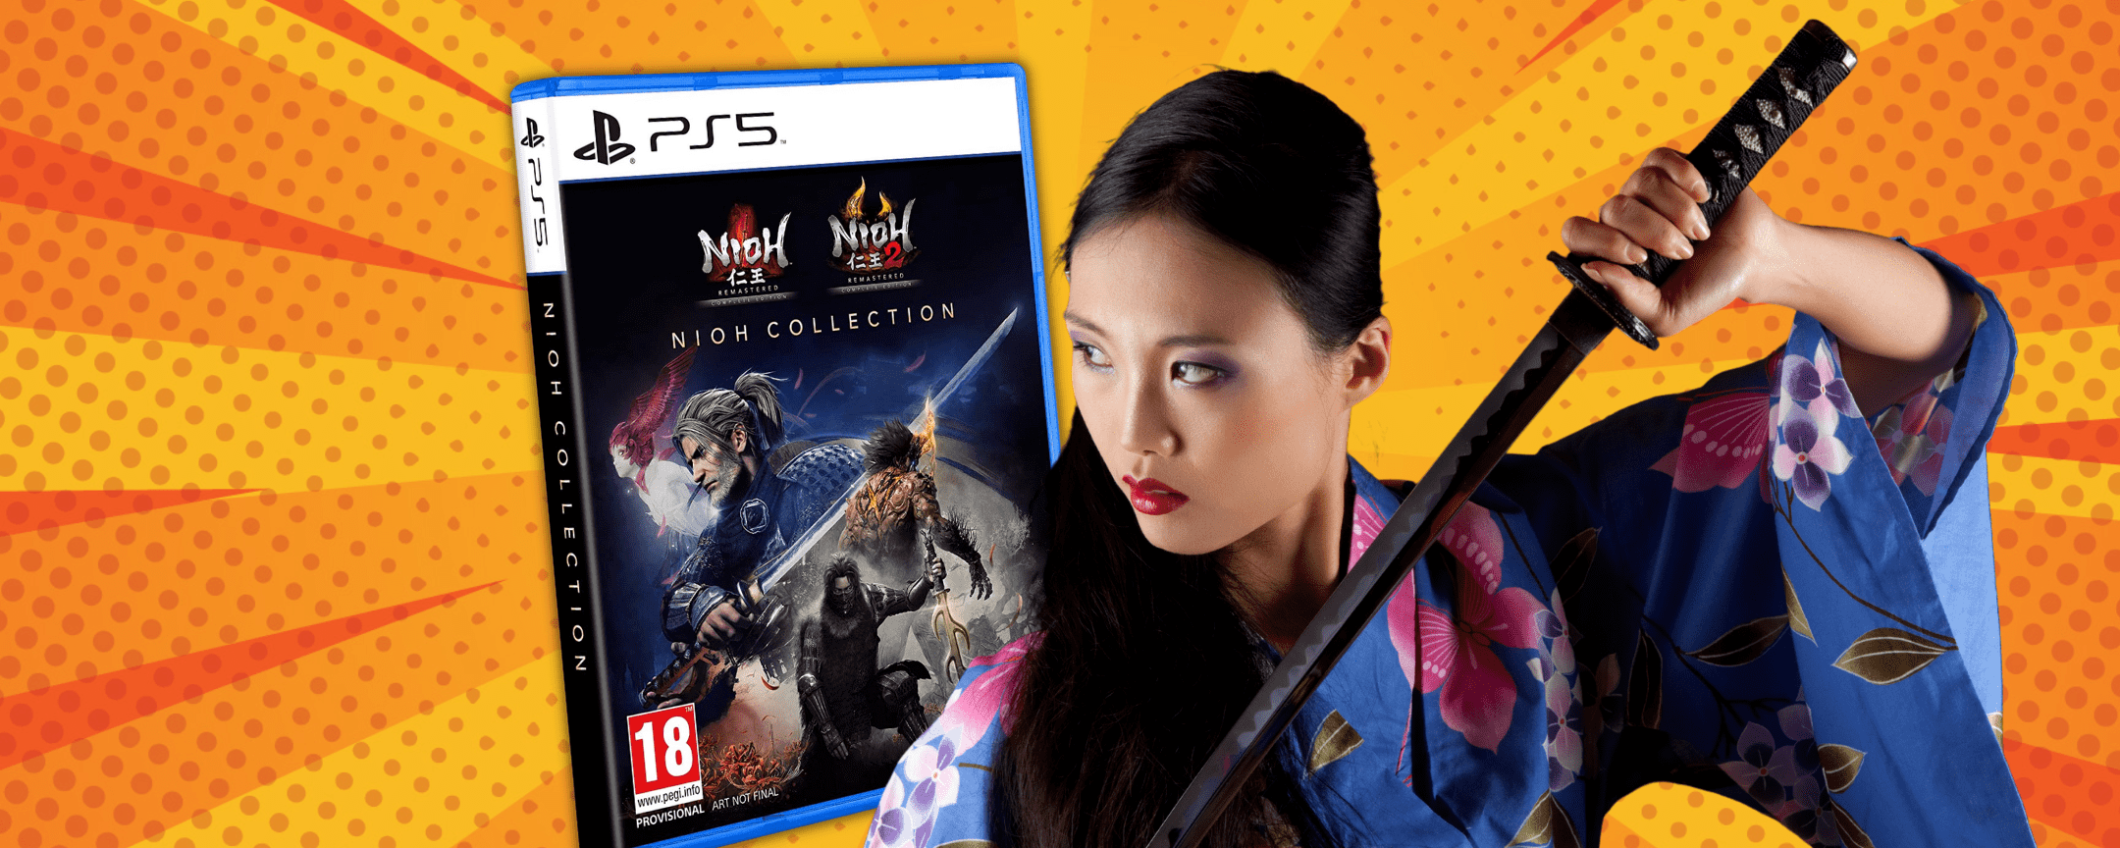 Nioh Collection PS5 in sconto: sei pronto a diventare un Samurai?